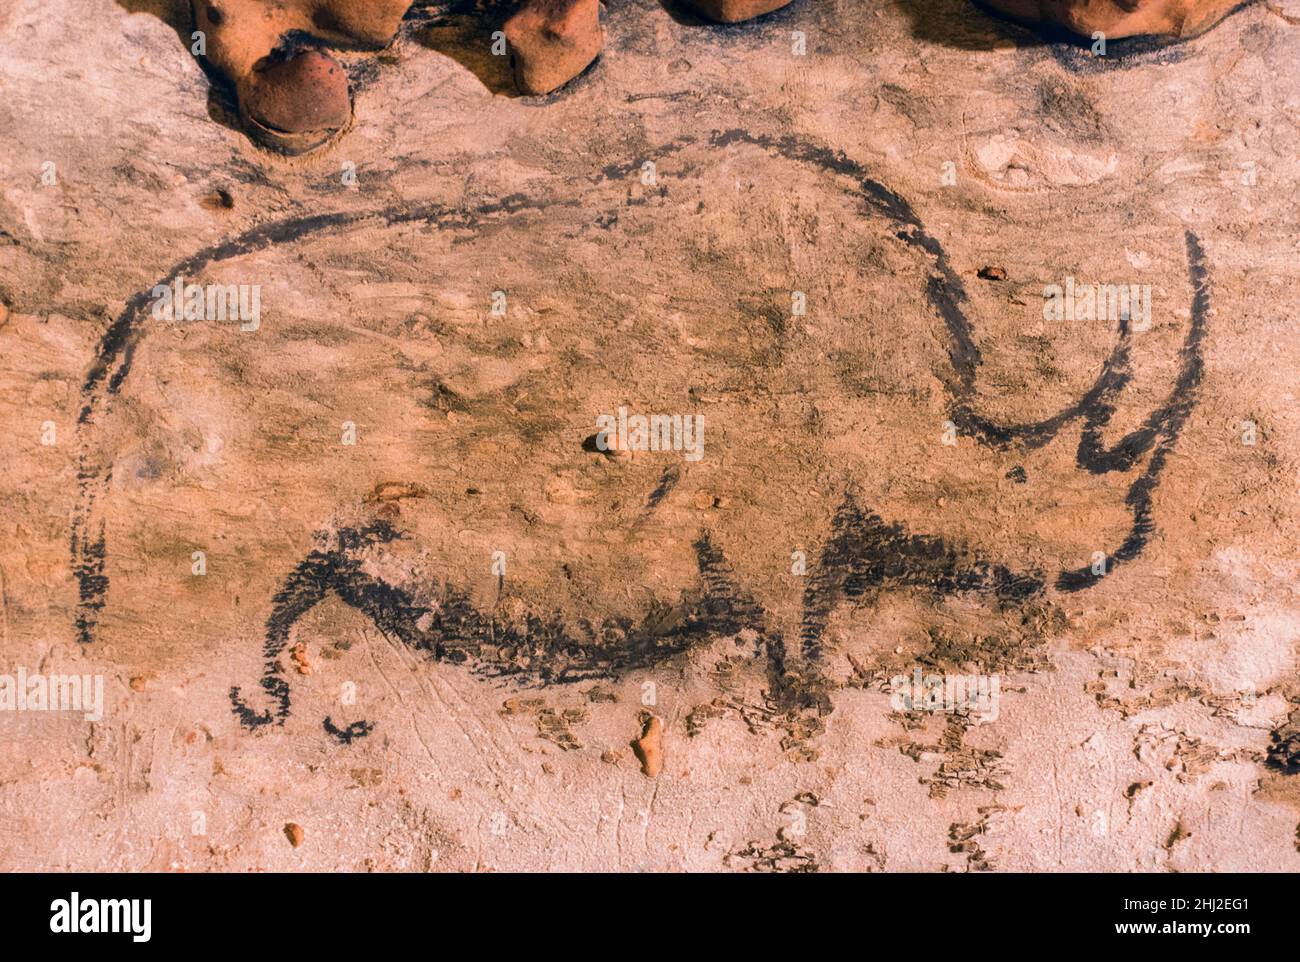 Prehistoric cave painting, woolly rhinoceros, Rouffignac, France Stock Photo